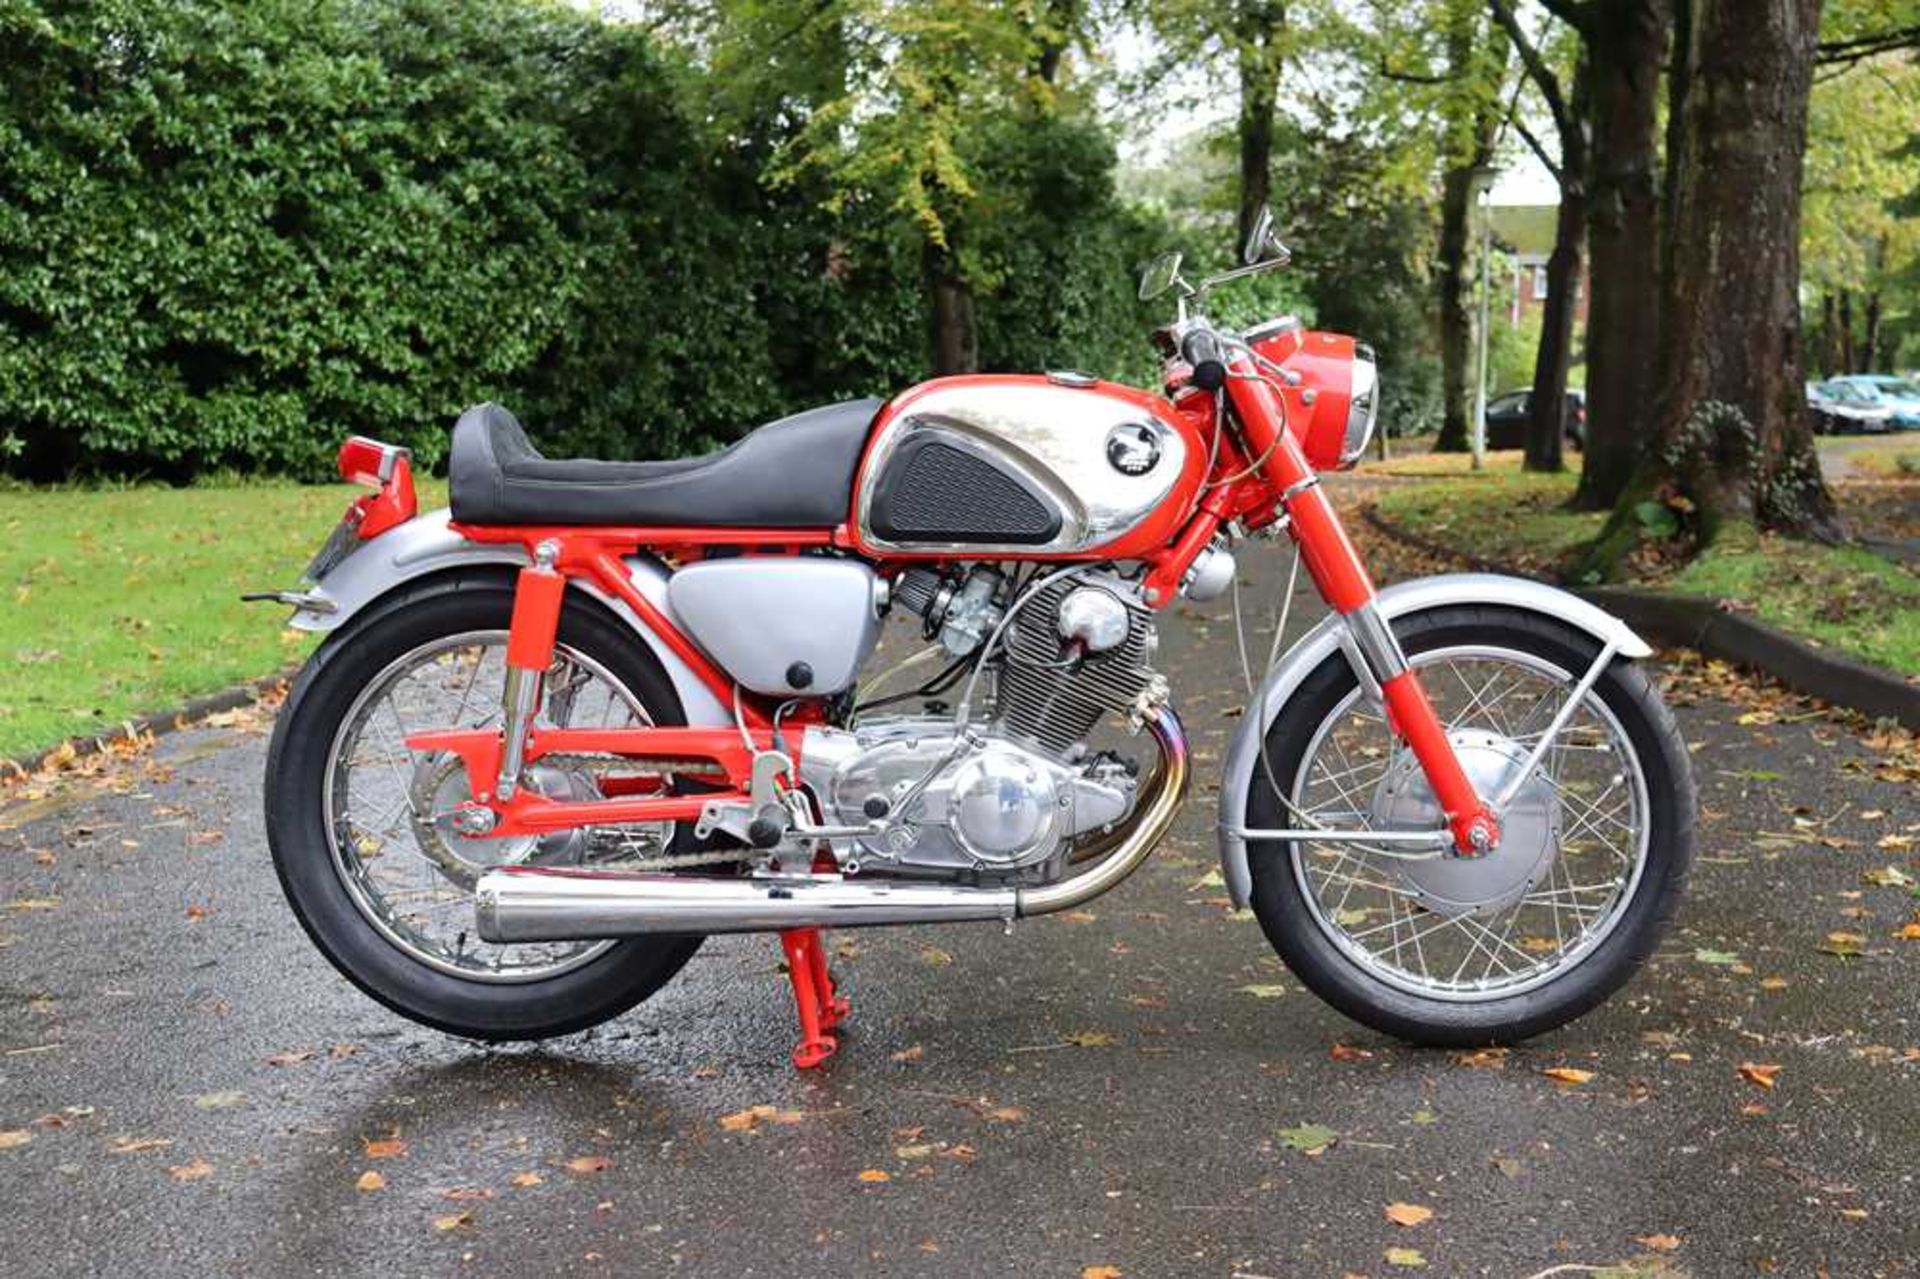 1966 Honda CB77 Restored to a high standard